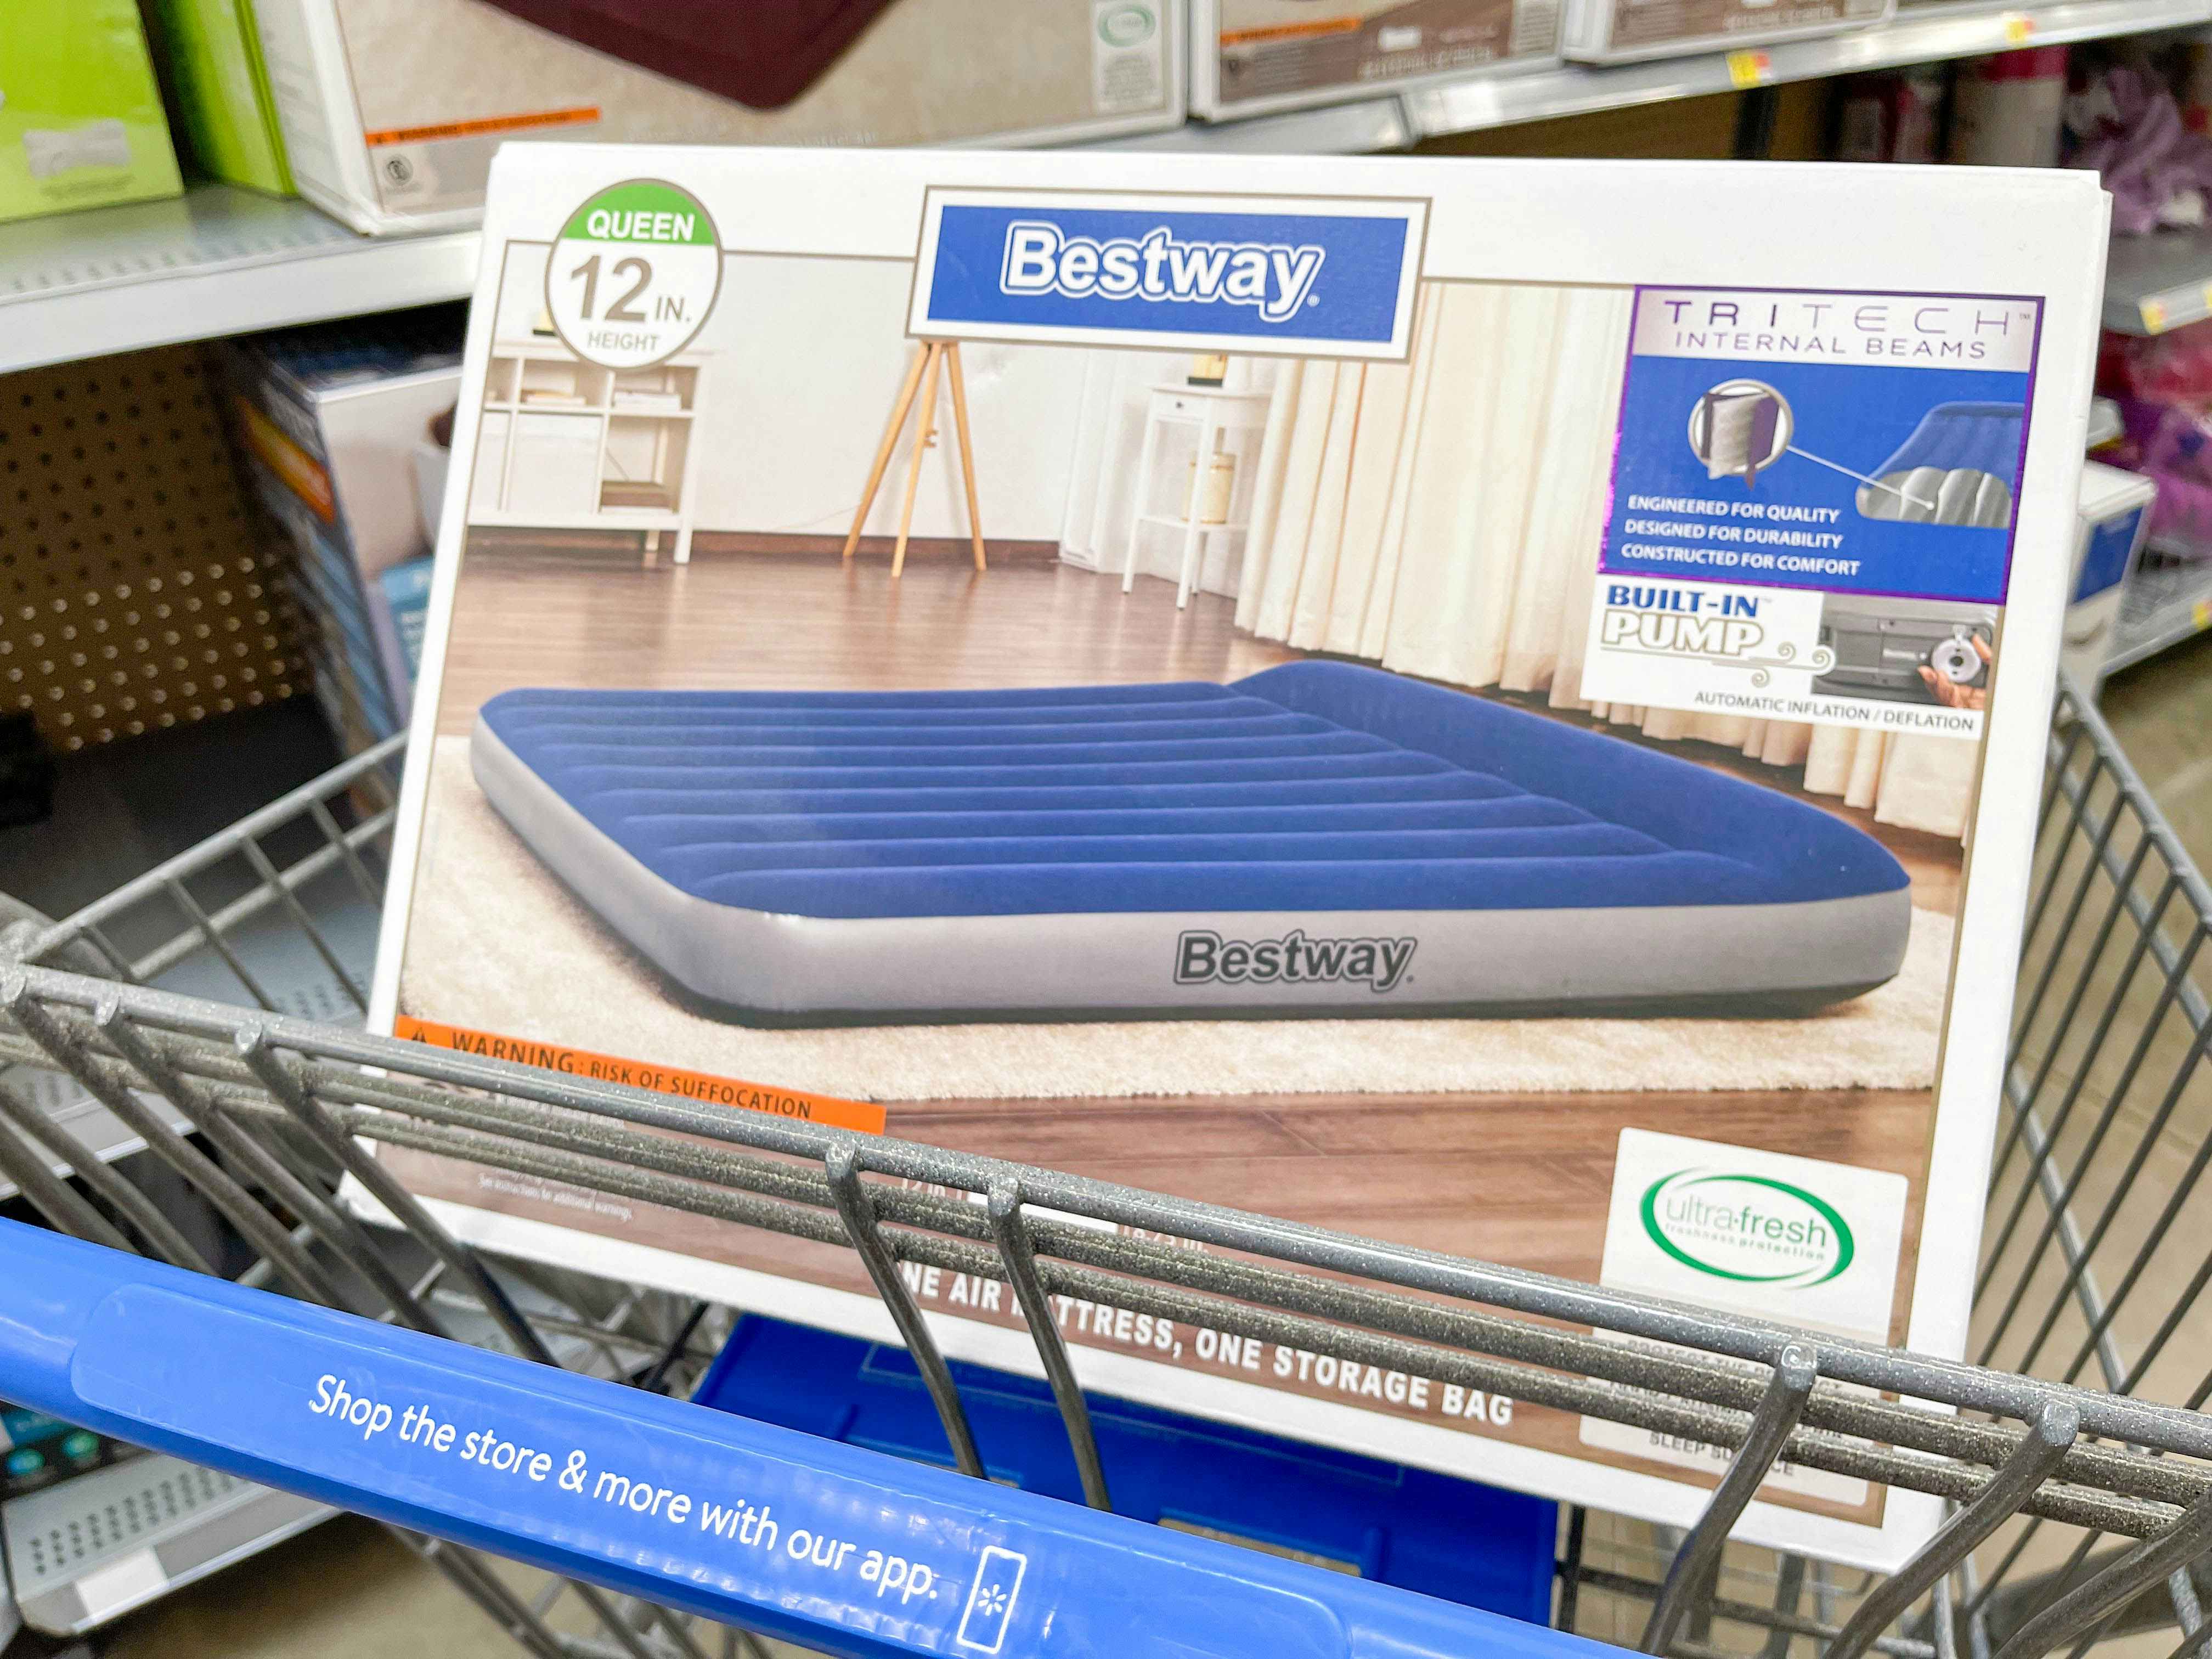 bestway air mattress box in walmart cart